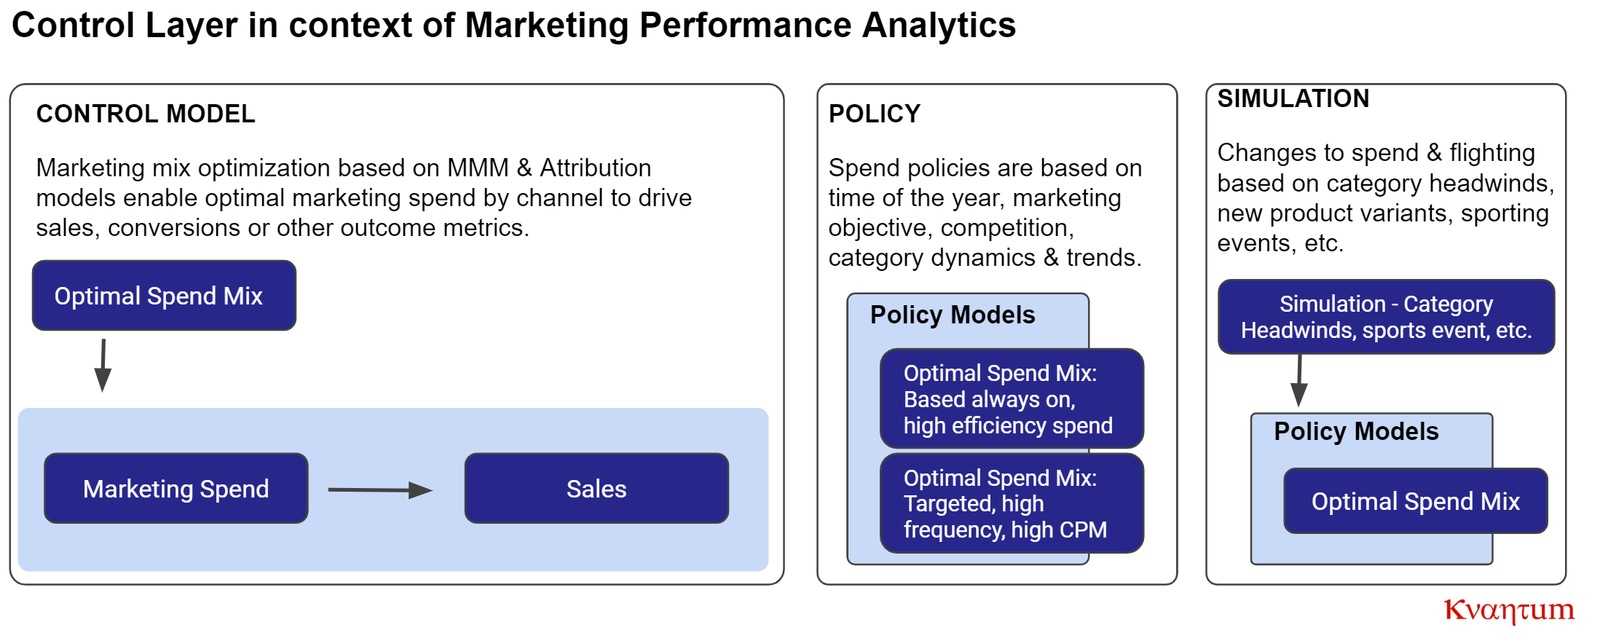 kvantum control layer marketing performance analytics